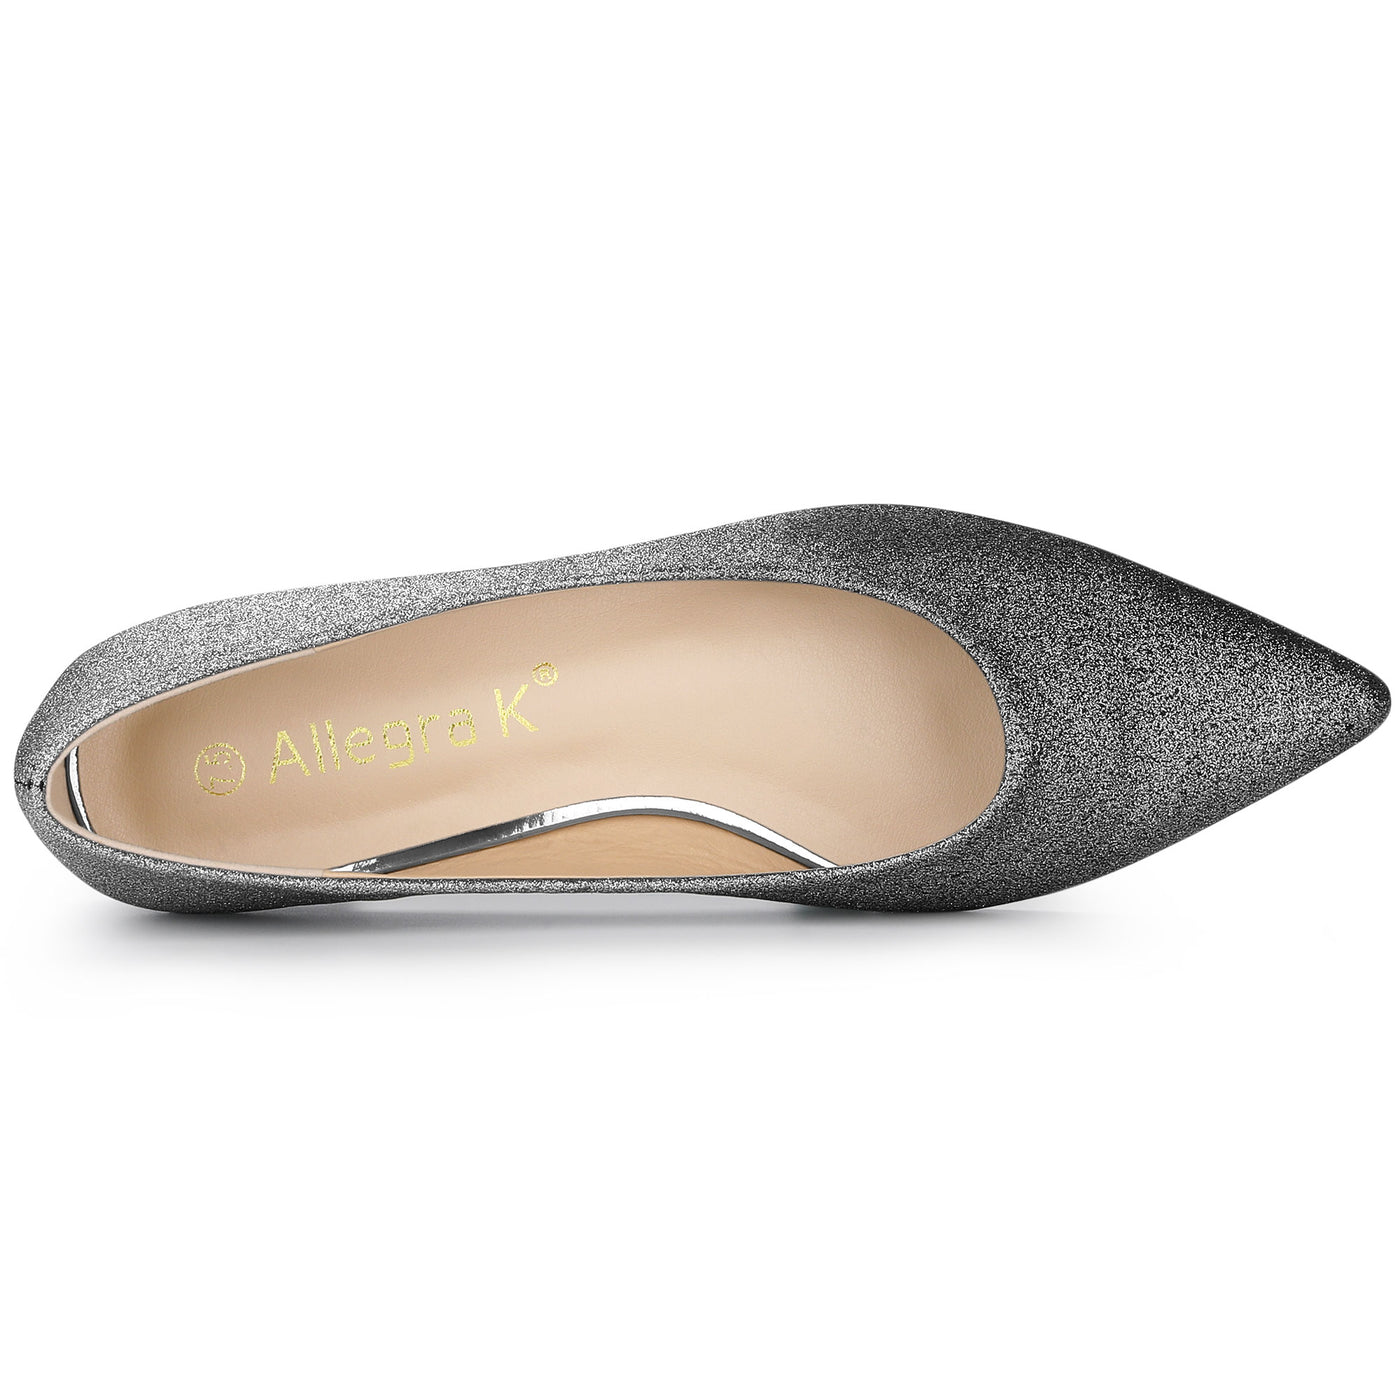 Allegra K Glitter Pointed Toe Ballet Flats Shoes